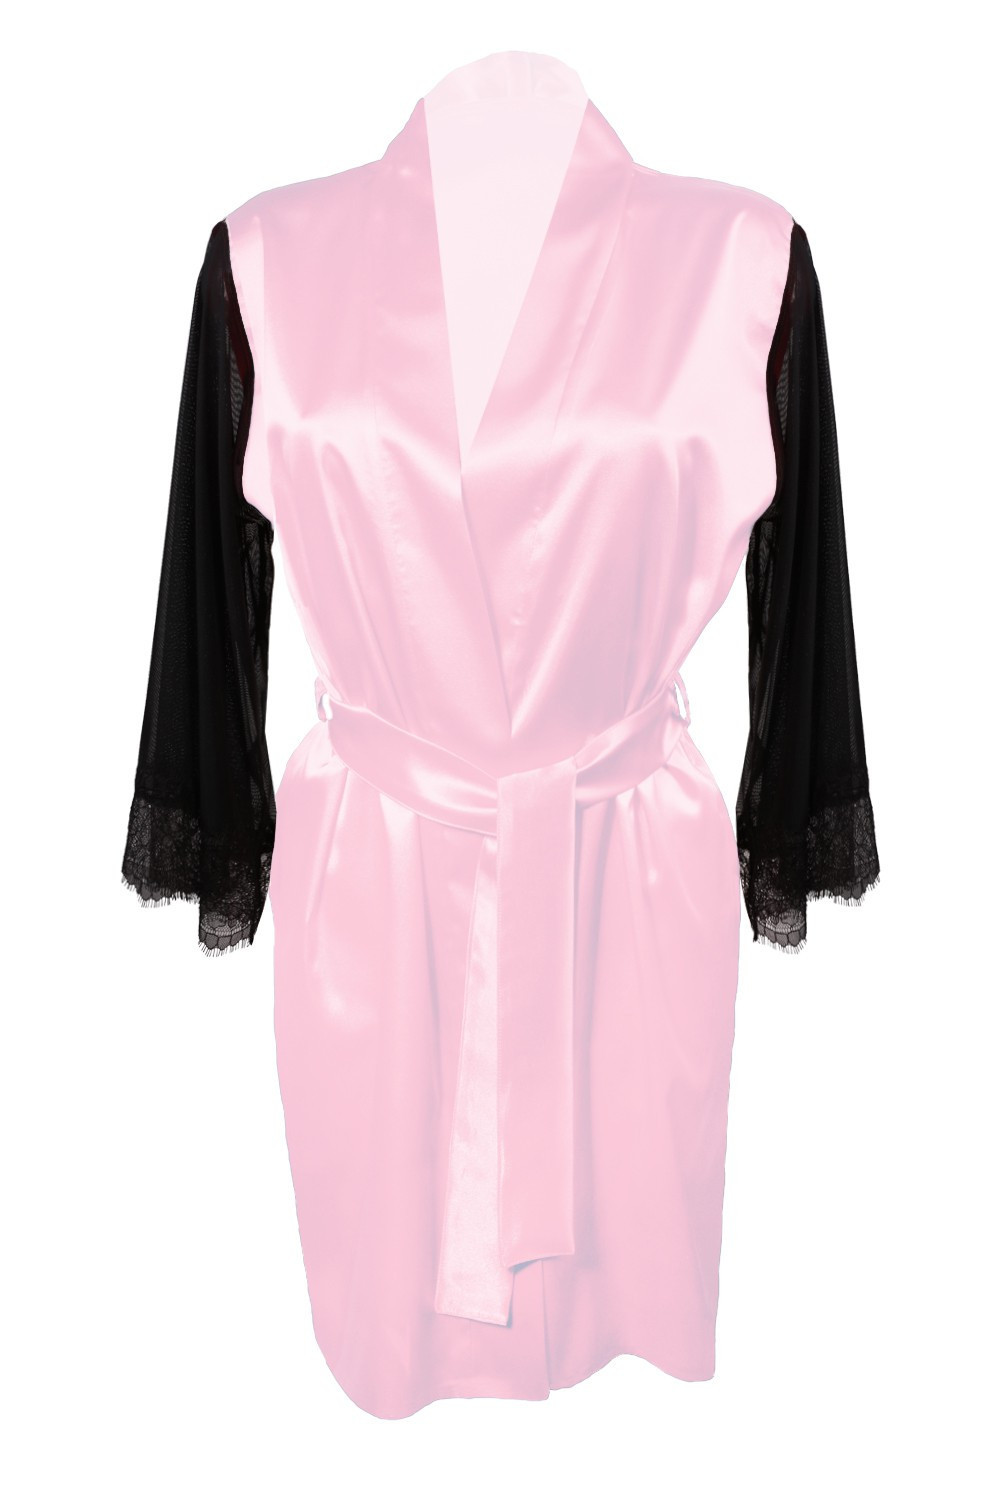 Housecoat model 18227289 Pink M Pink - DKaren